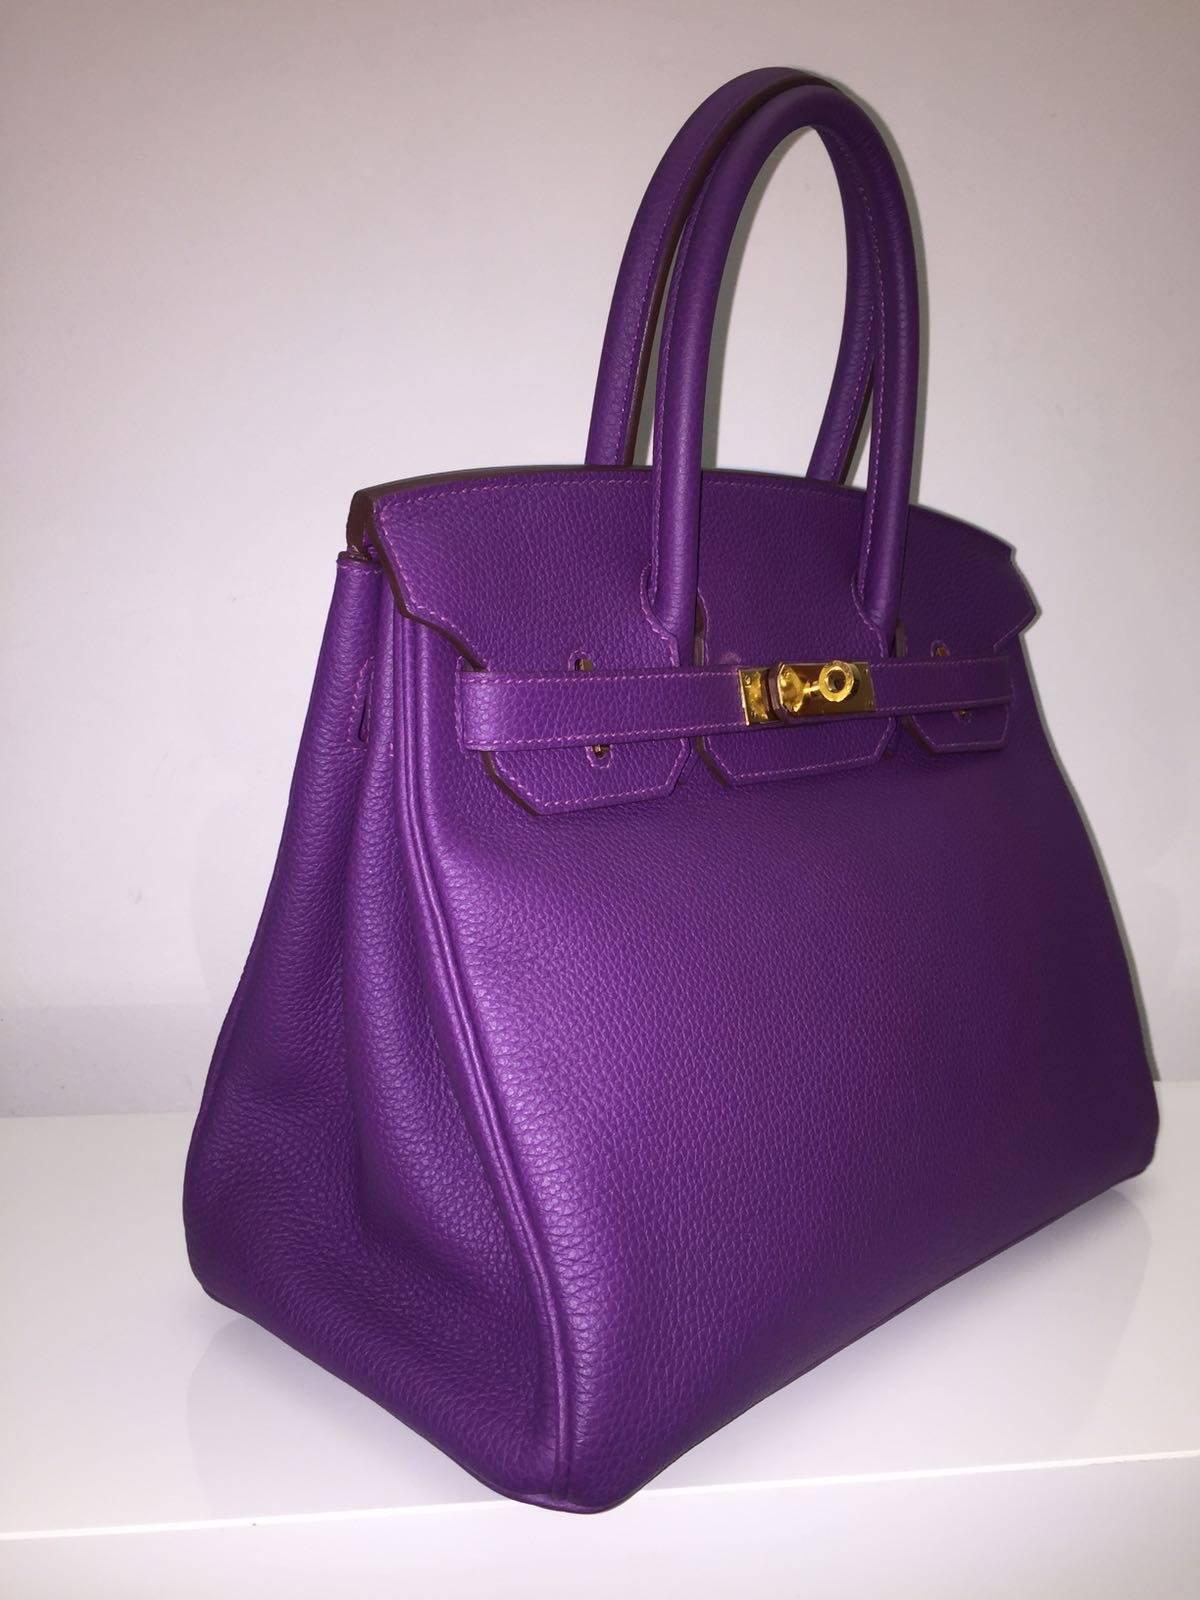 Purple Brand New Hermes Birkin 30 Togo Anemone GHW For Sale